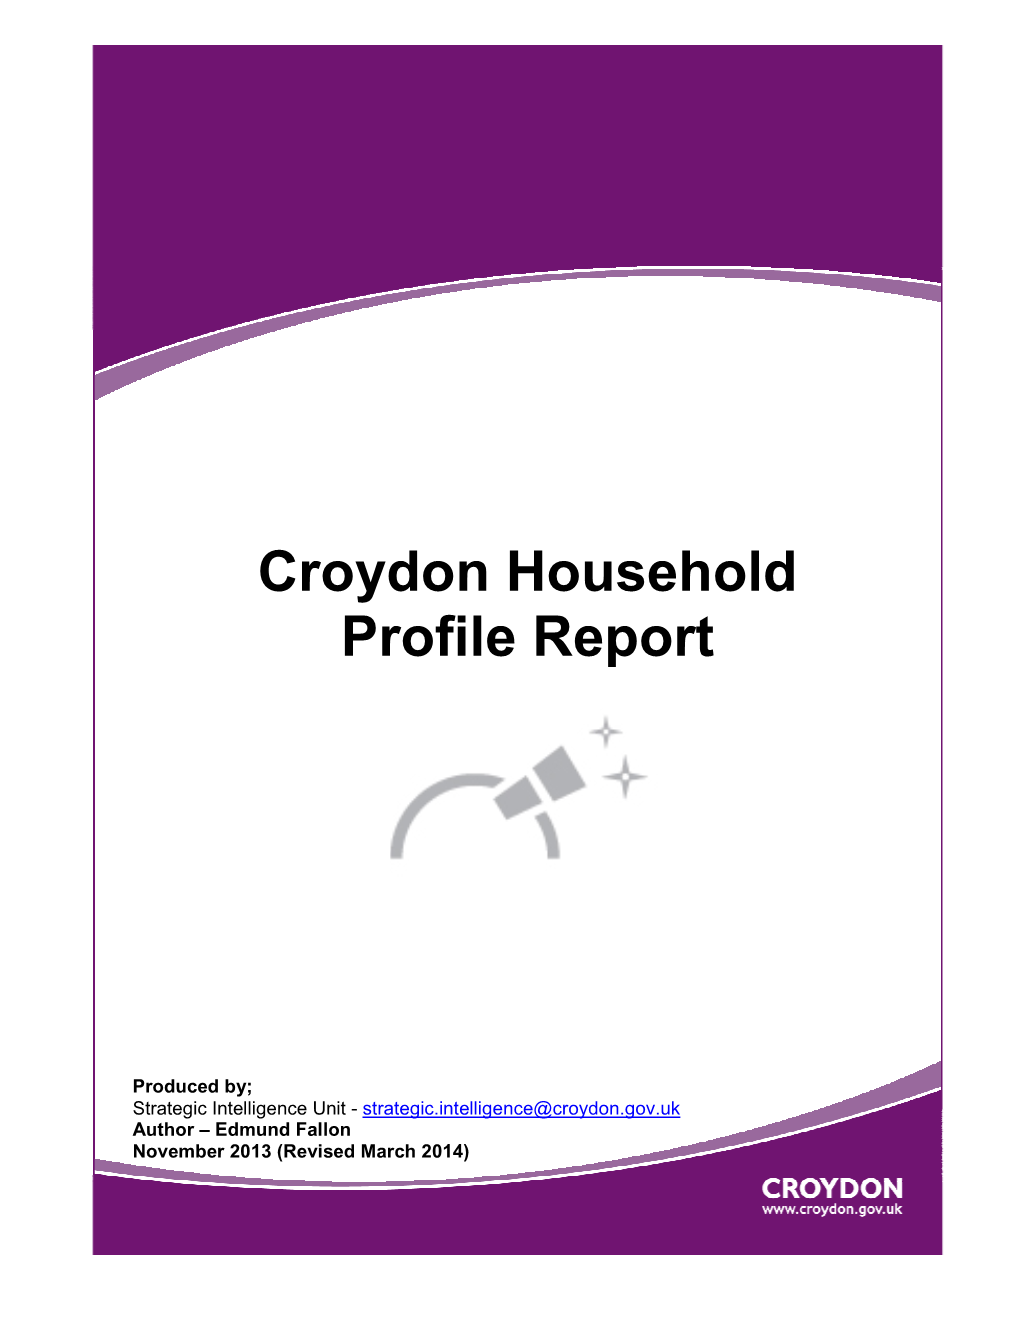 Croydon Household Profile Report